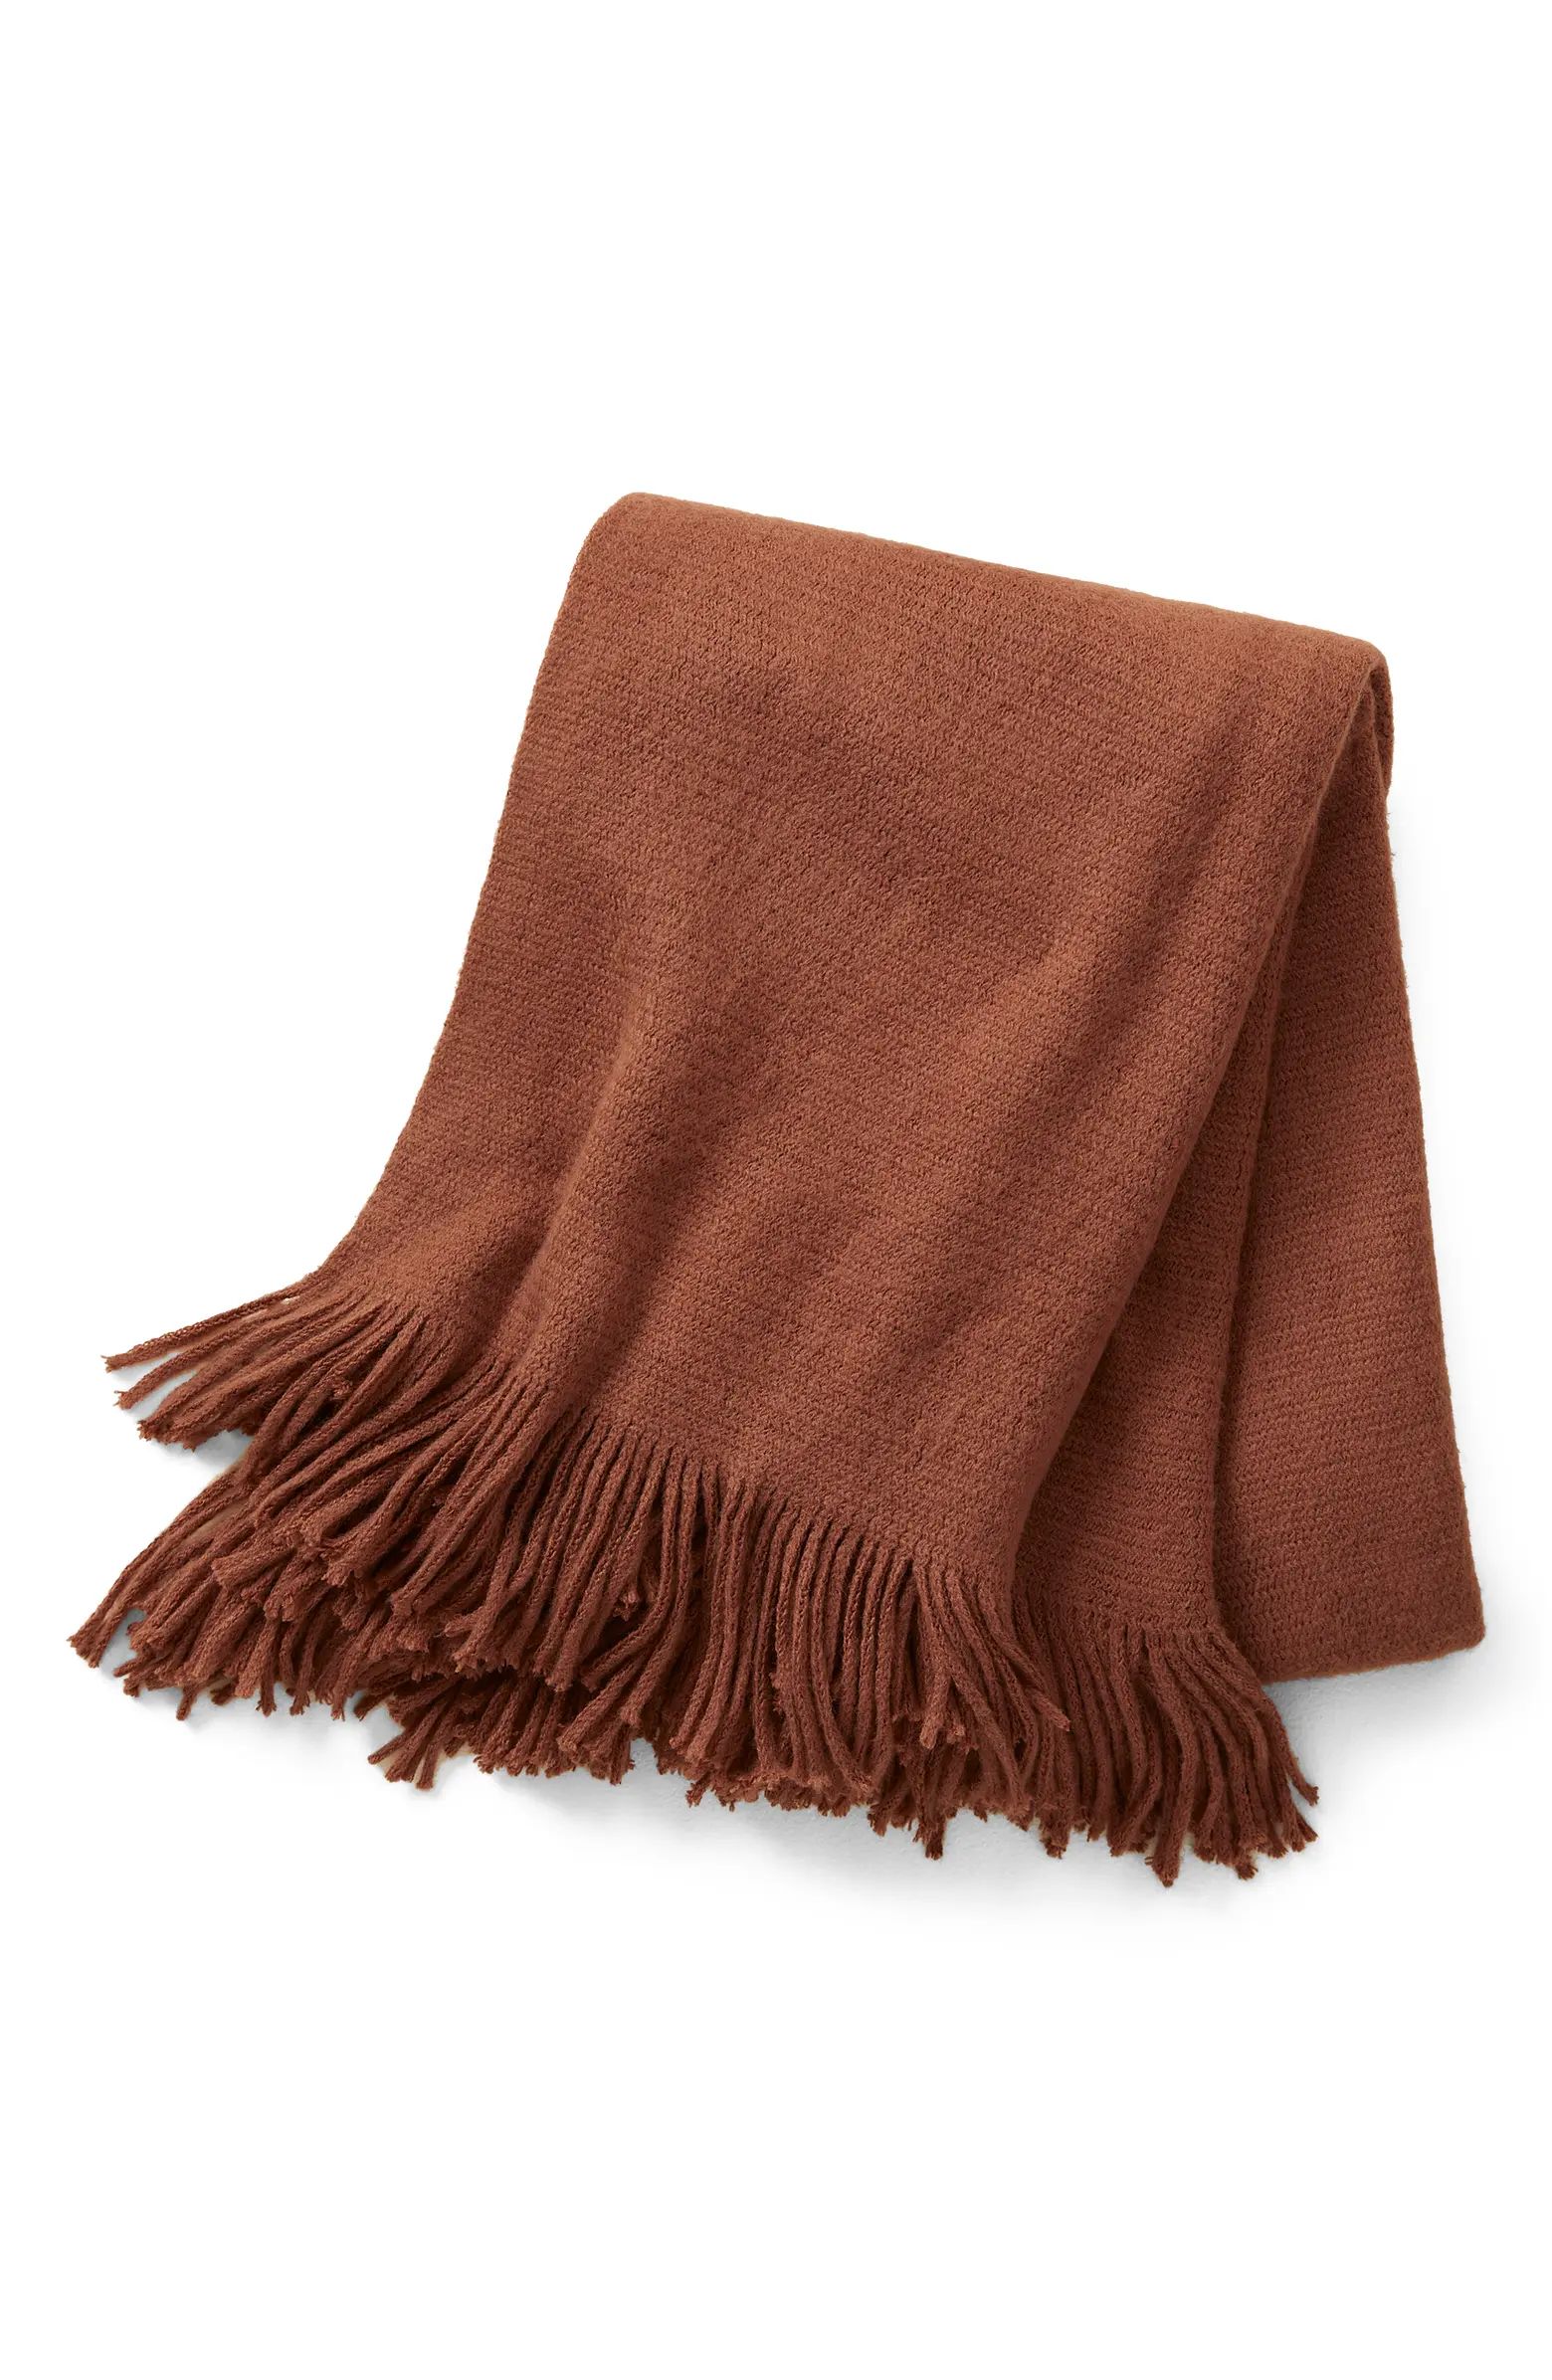 x Nordstrom The Softest Throw Blanket | Nordstrom